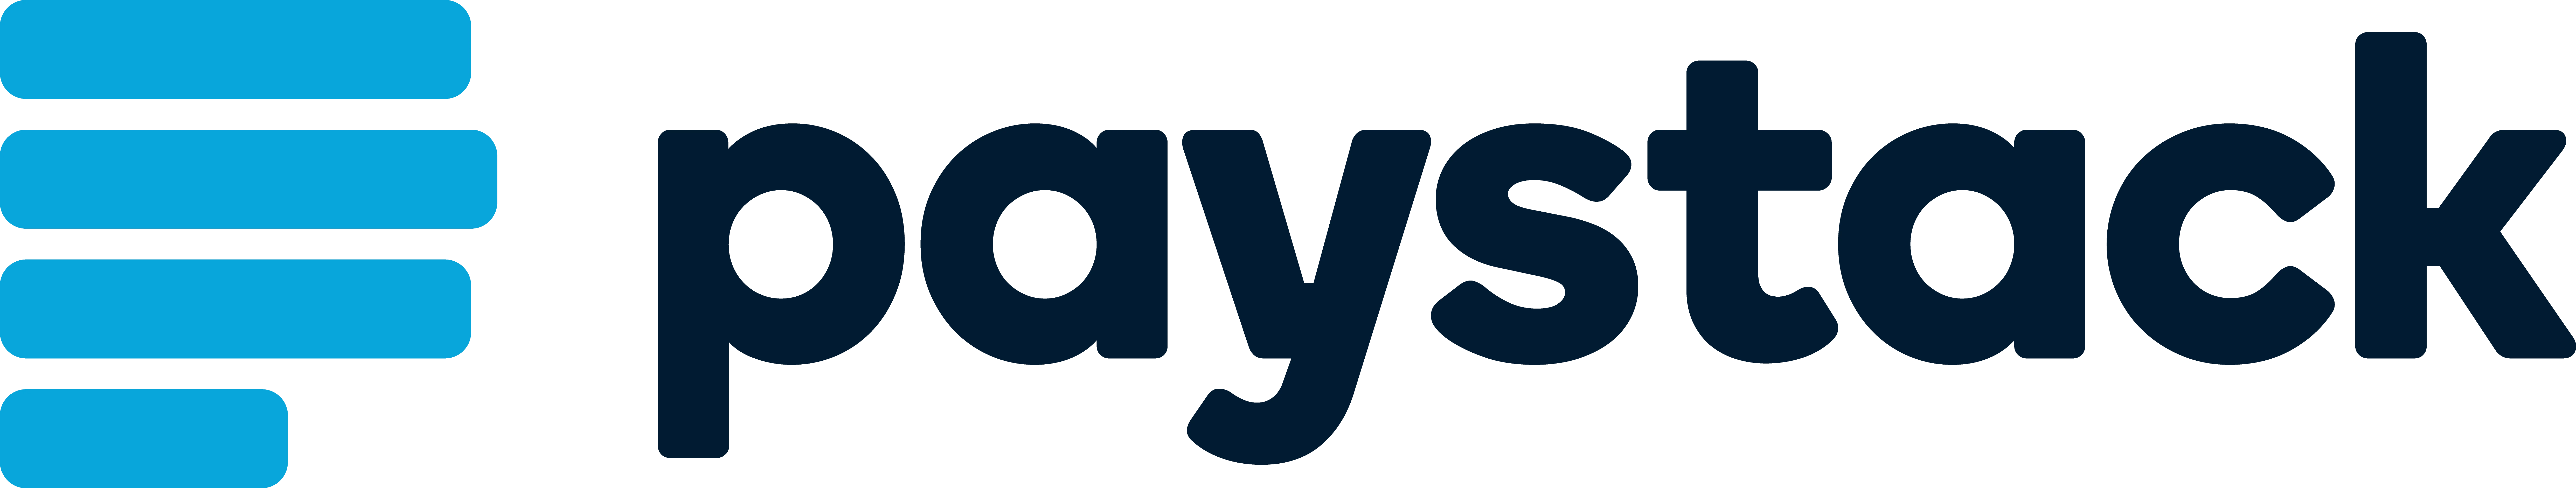 Paystack Logo